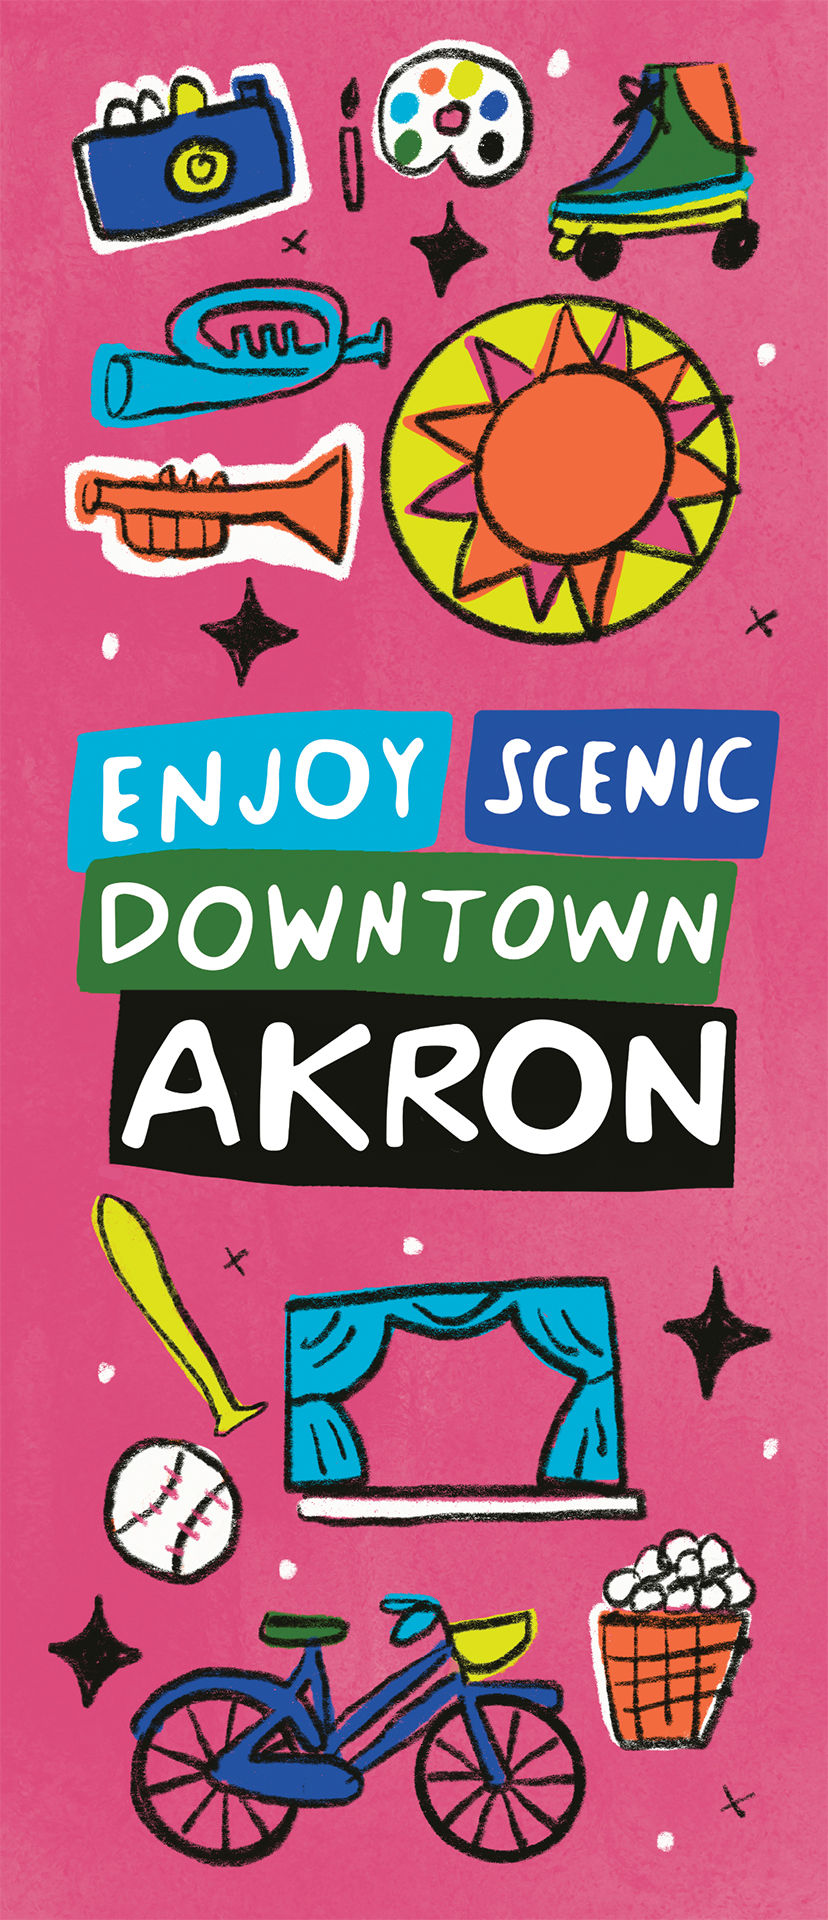 Image of the Enjoy Scenic Downtown Akron Passport